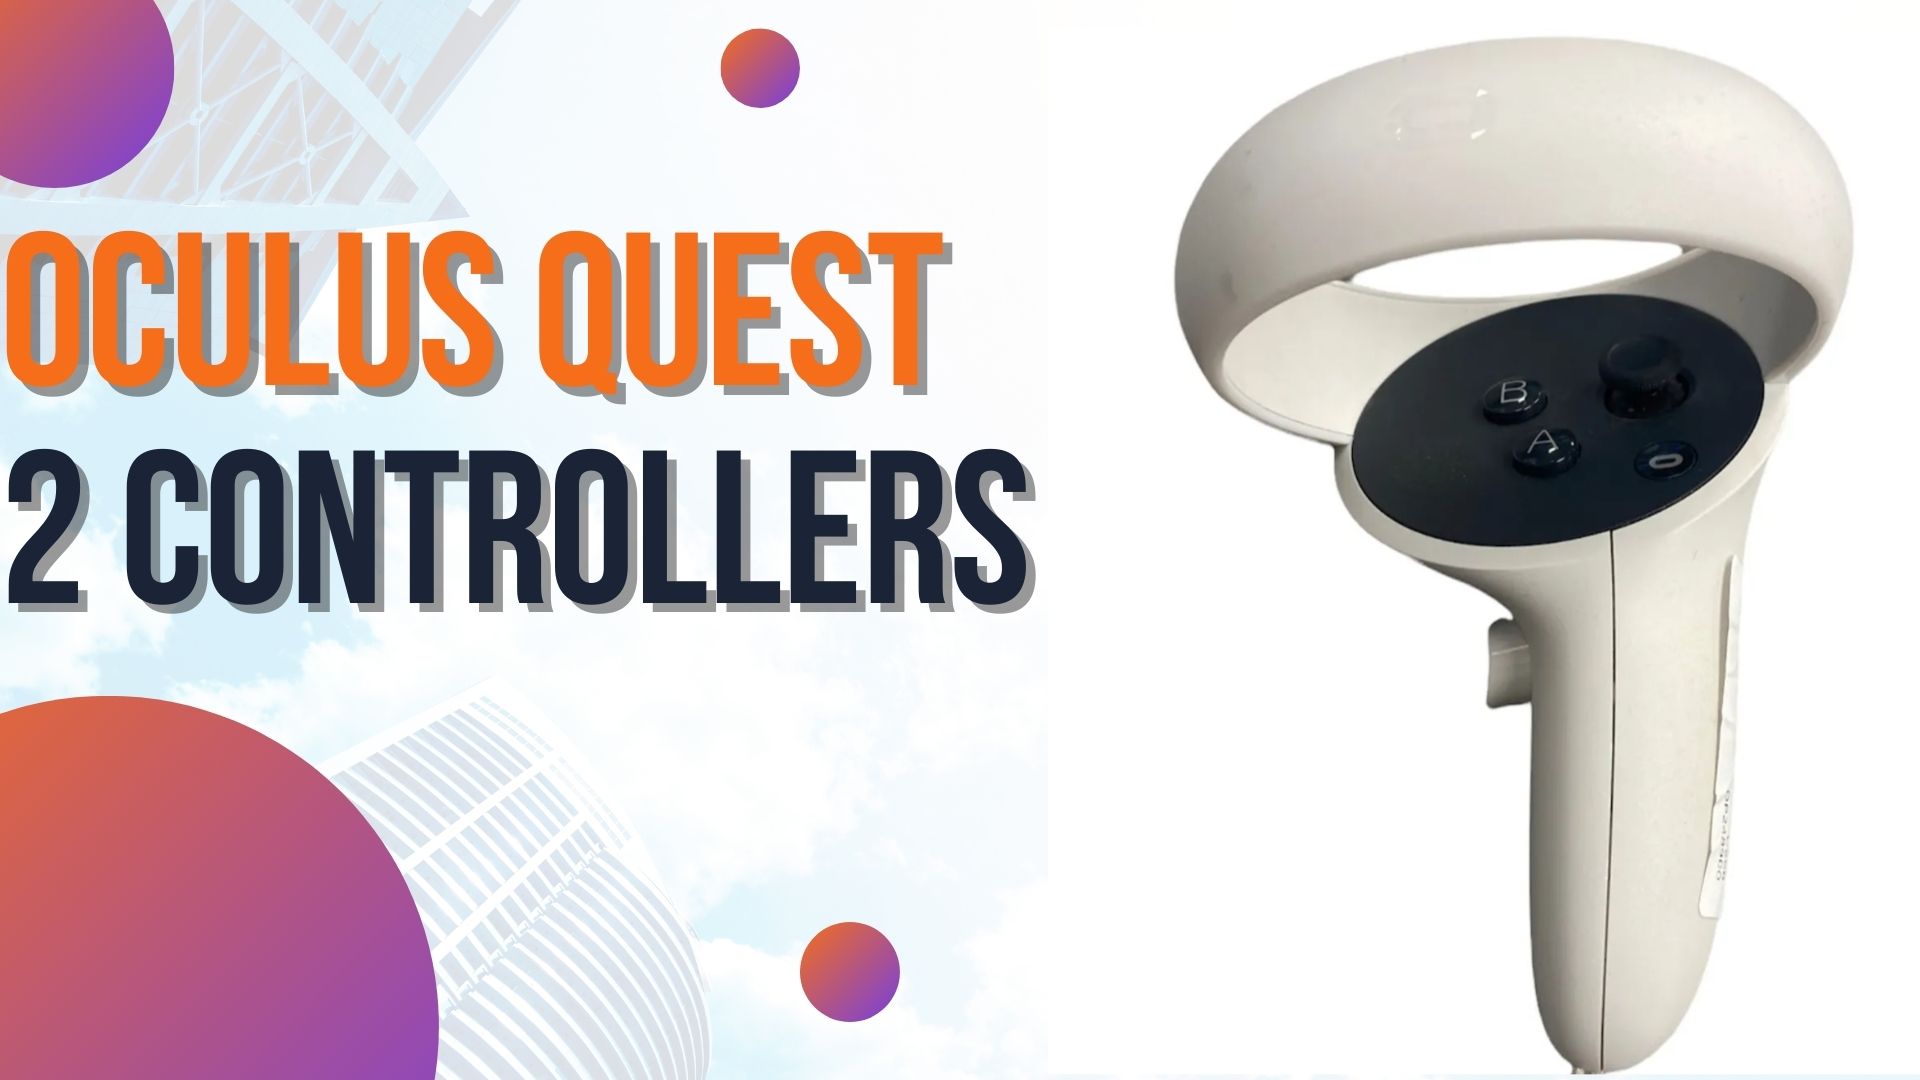 Oculus Quest 2 Controllers